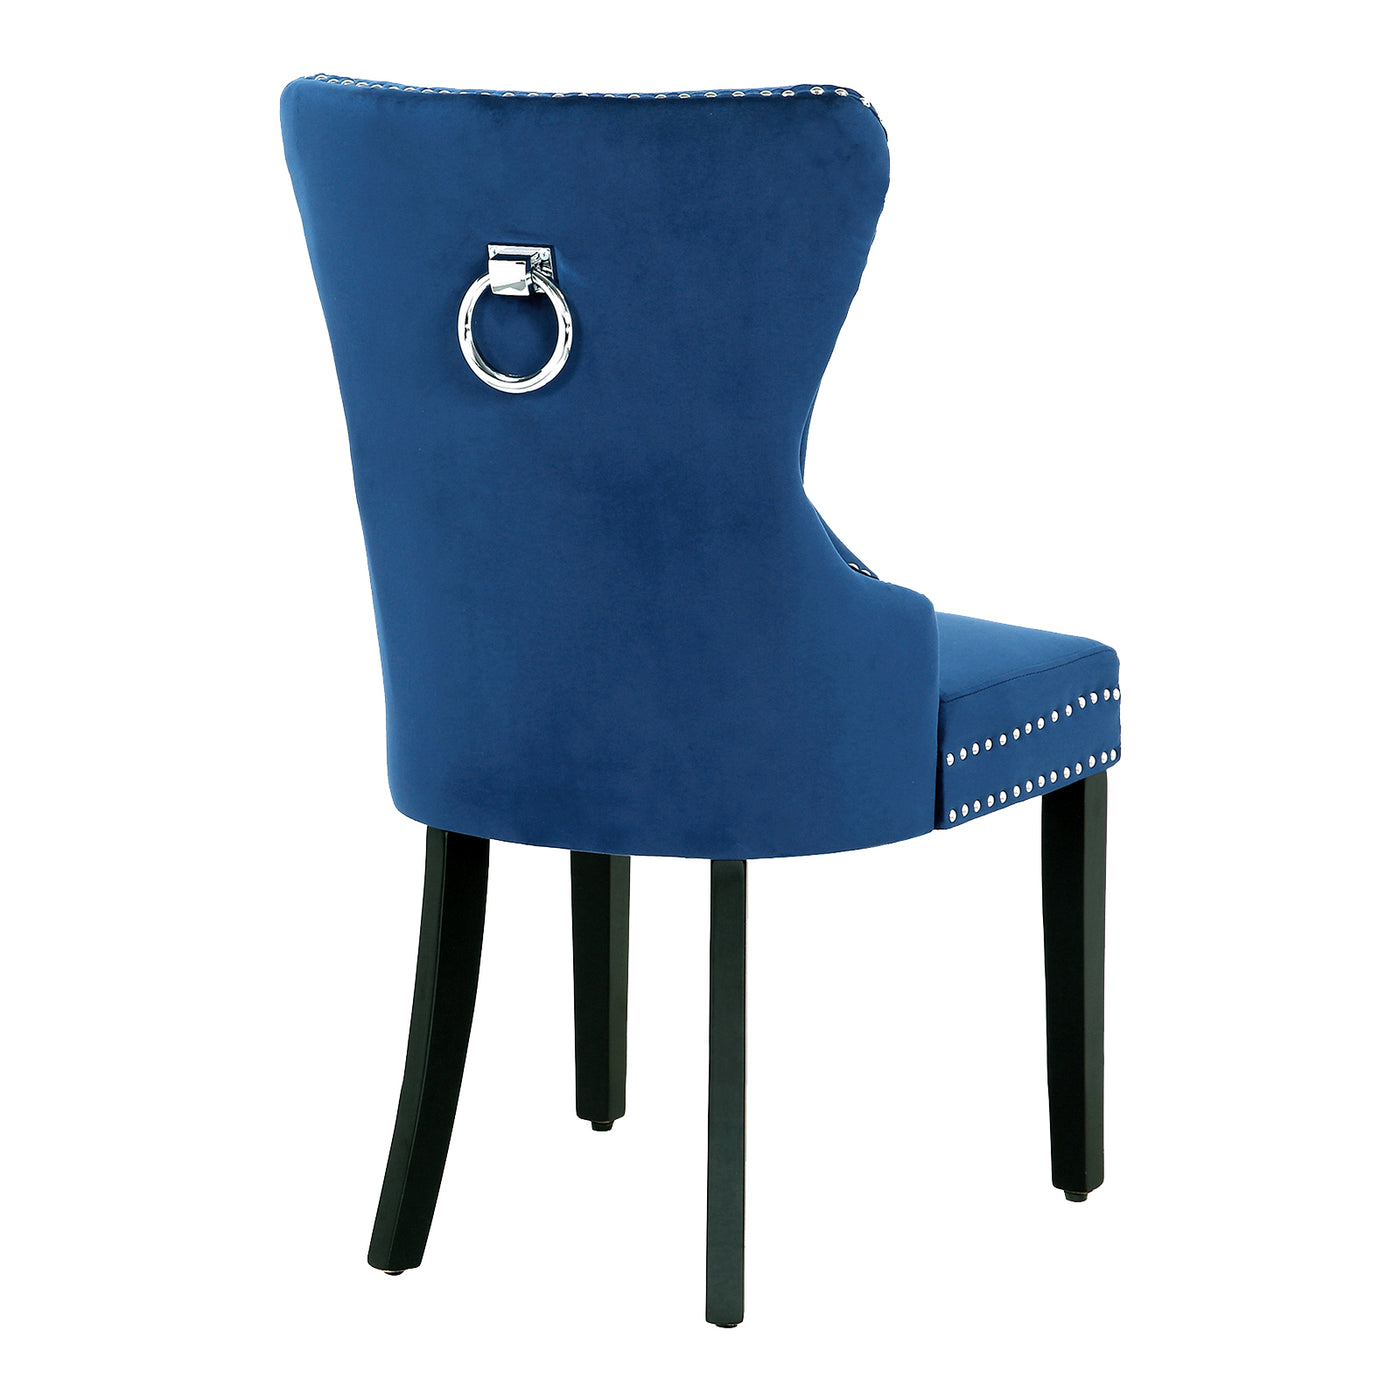 Wordford Velvet Upholstered Tufted Dining Chairs (Set of 4)